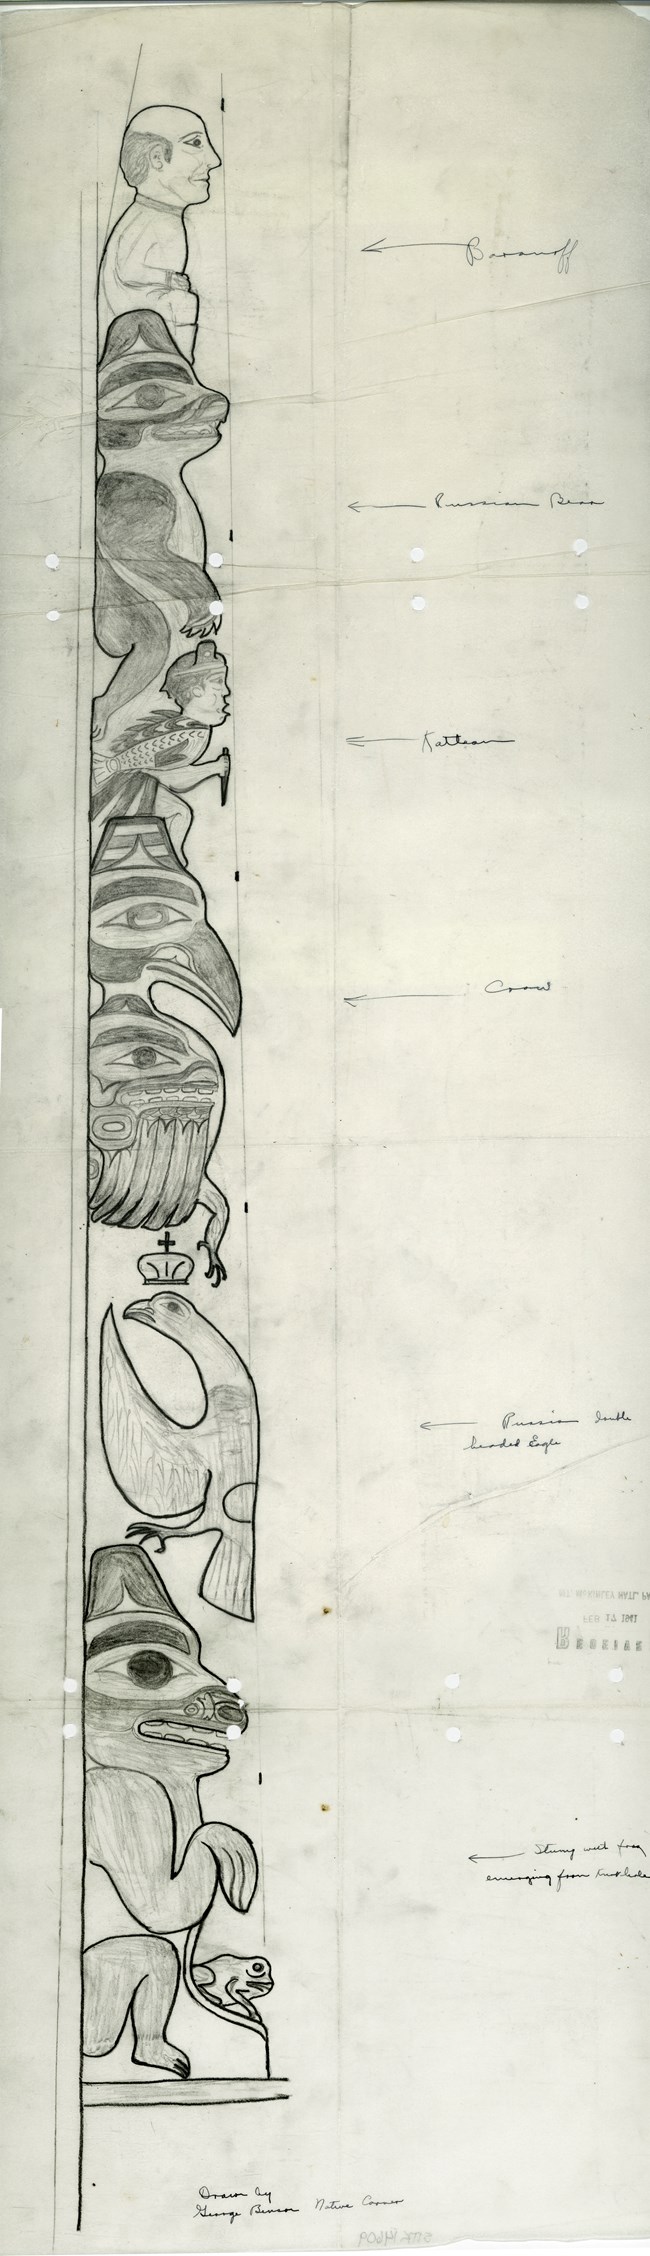 A sketch of a totem pole design on paper